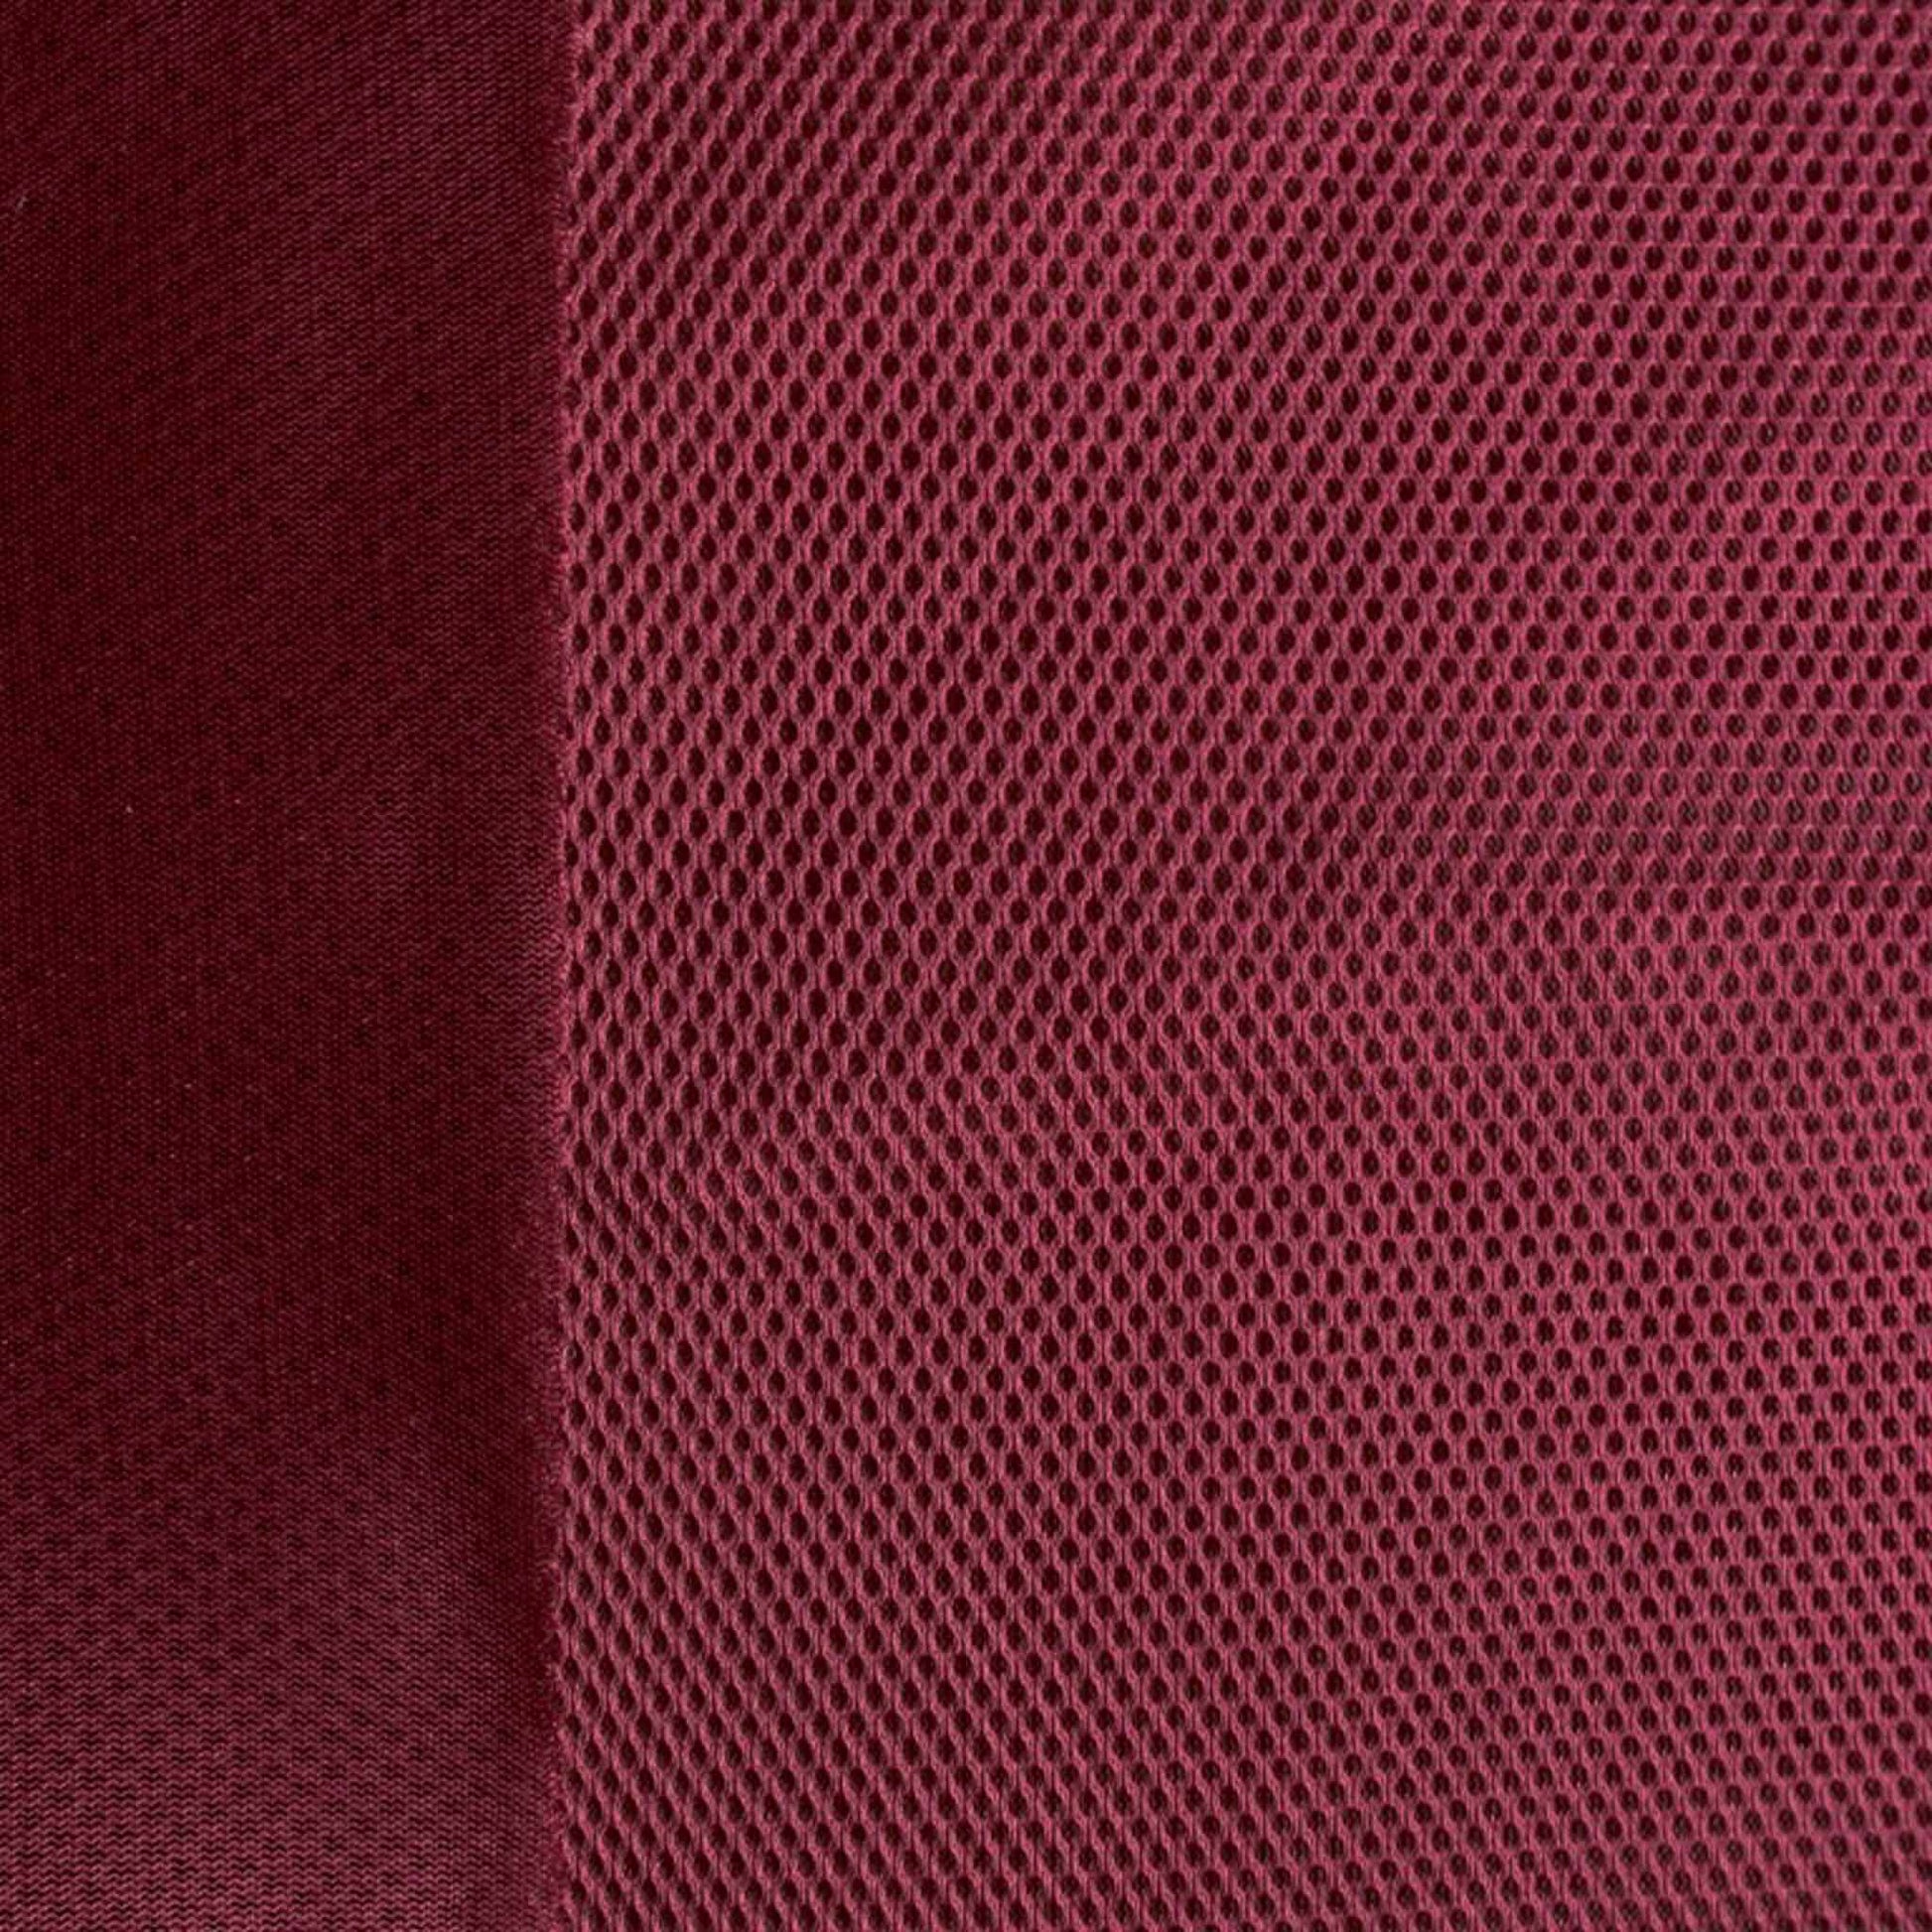 3D spacer mesh airtex sports fabric in maroon